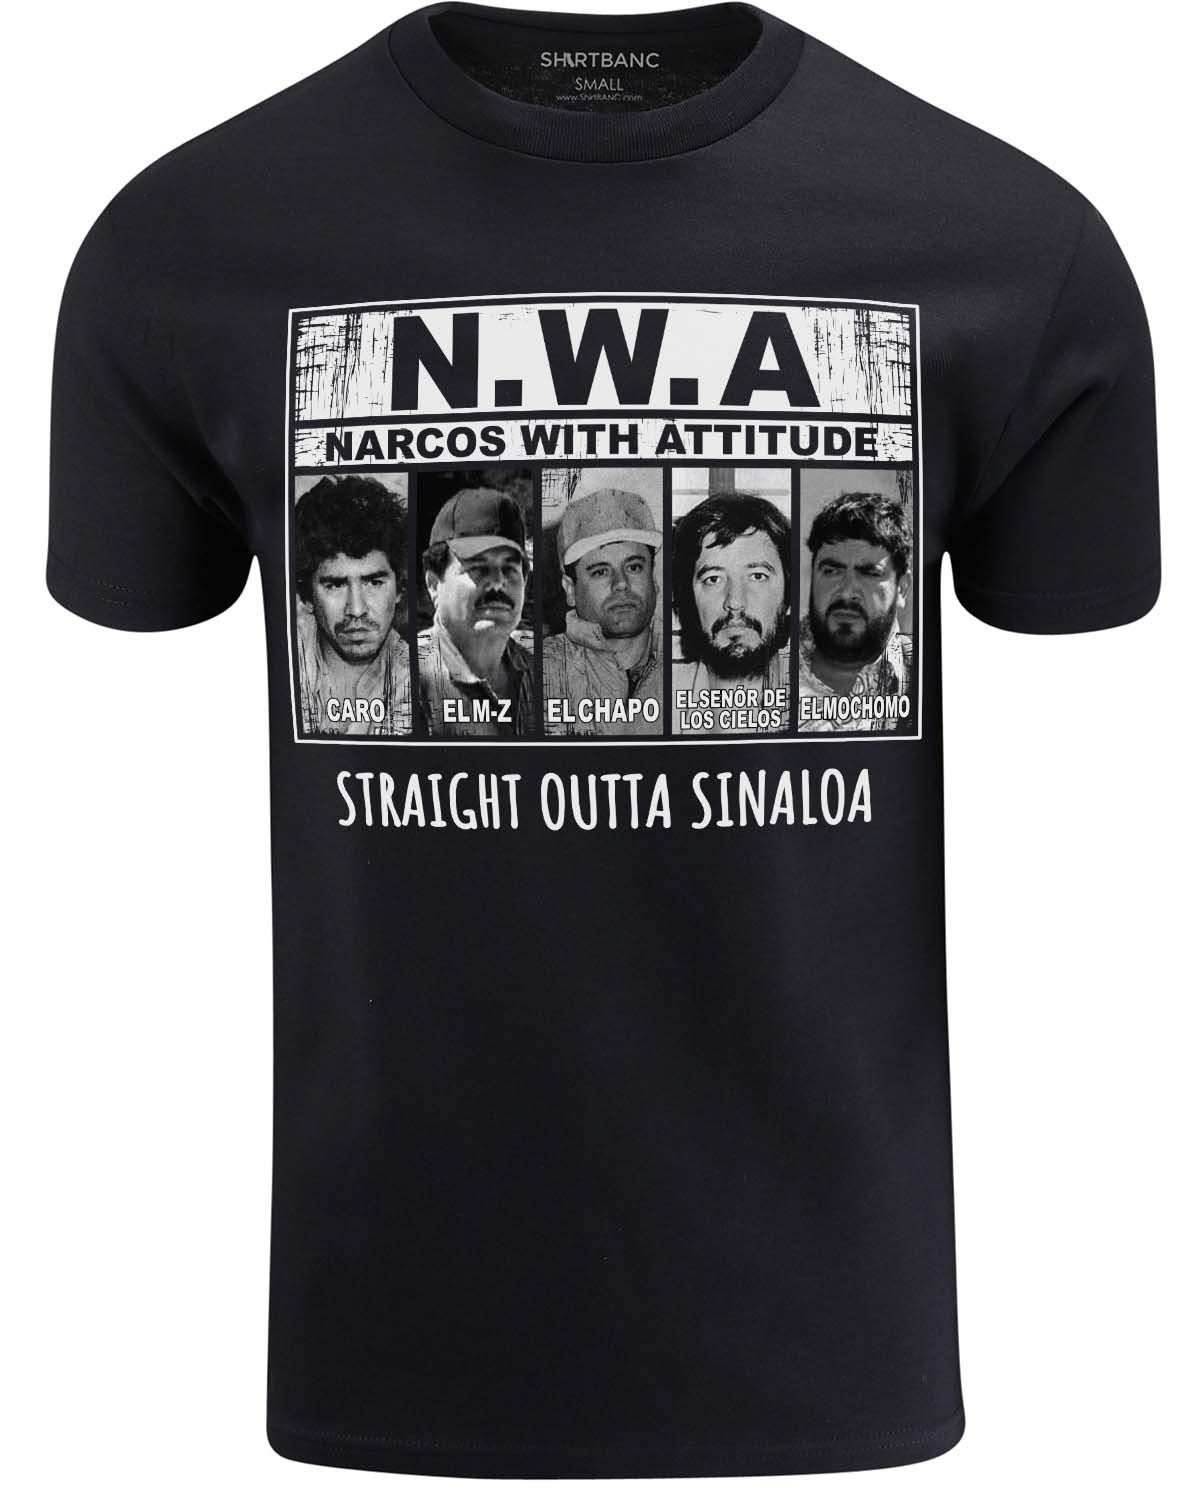 ShirtBANC Cartel Mens N.W.A. Narcos With Attitude Shirt Straight Outta Sinaloa - image 1 of 6